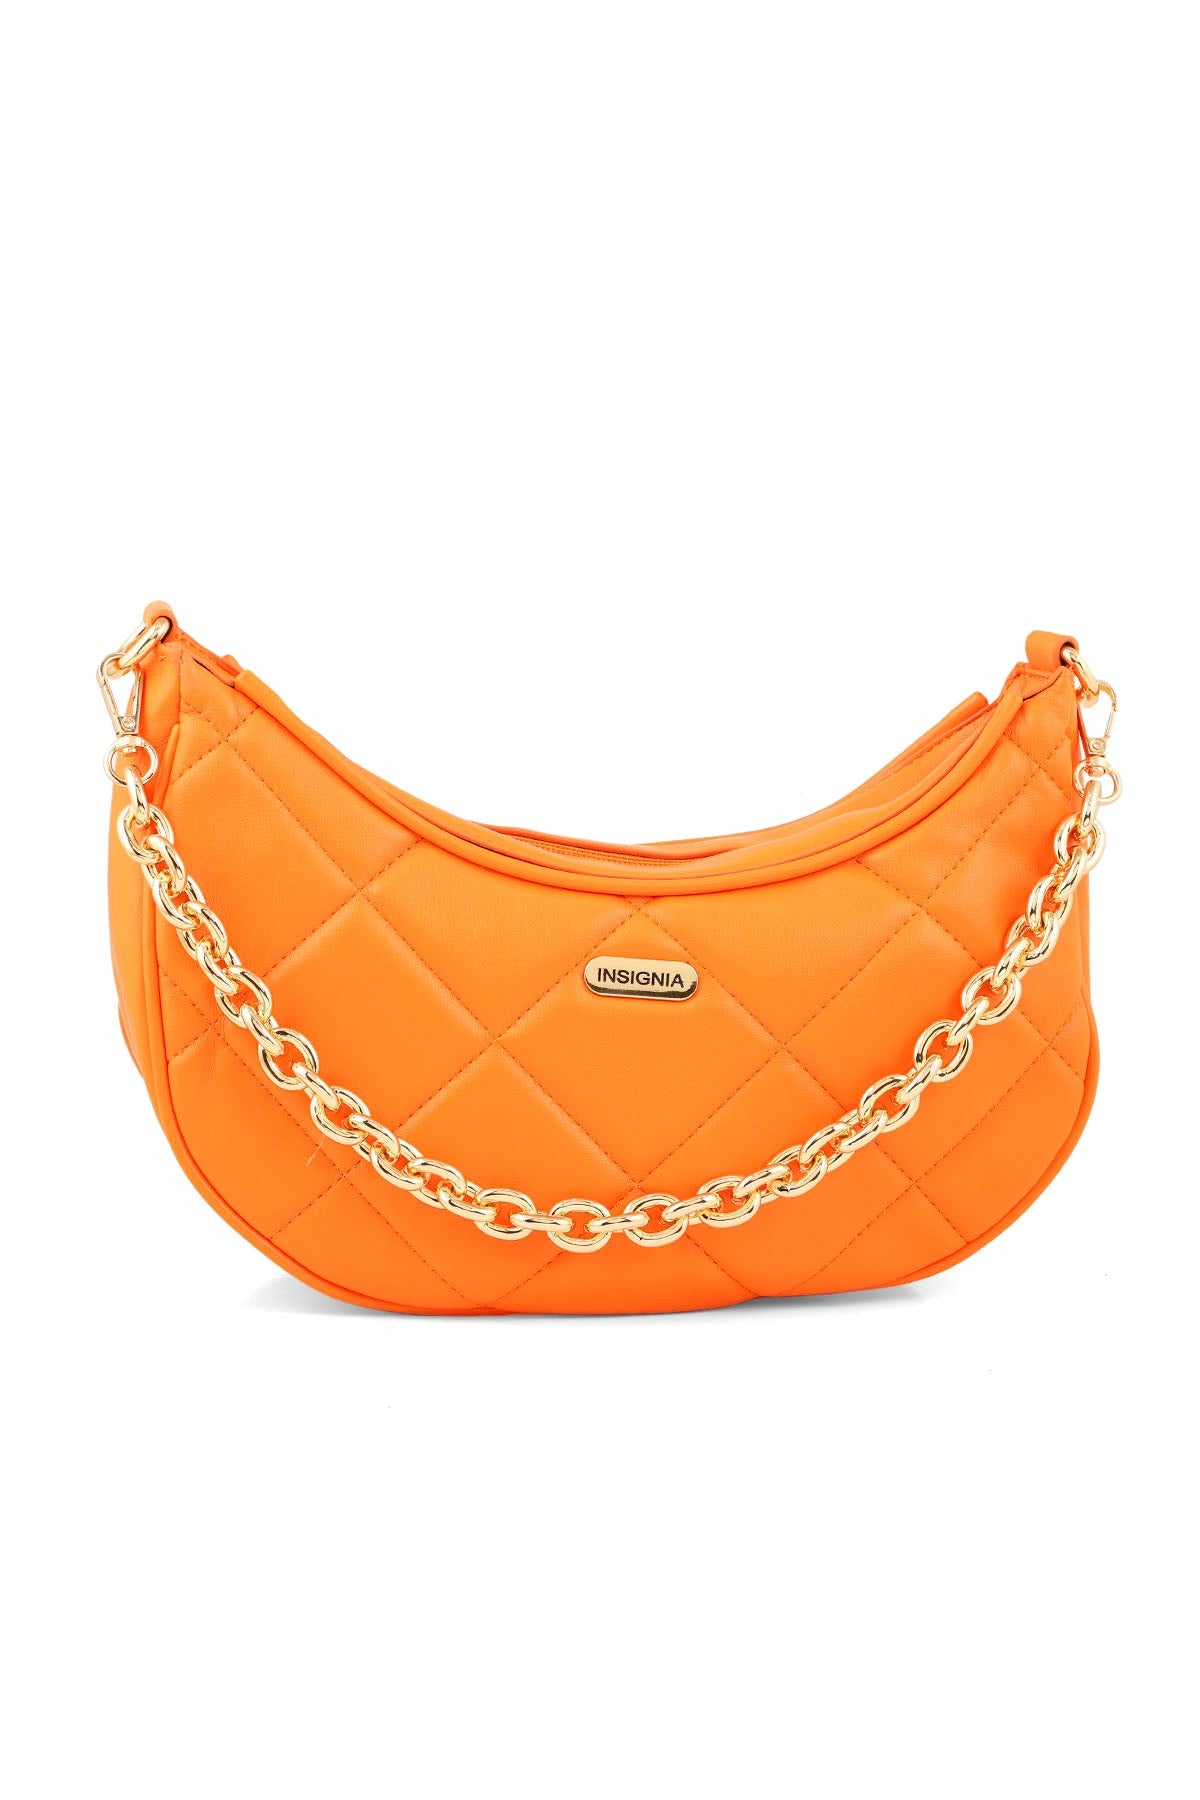 Baguette Shoulder Bags B15137-Orange